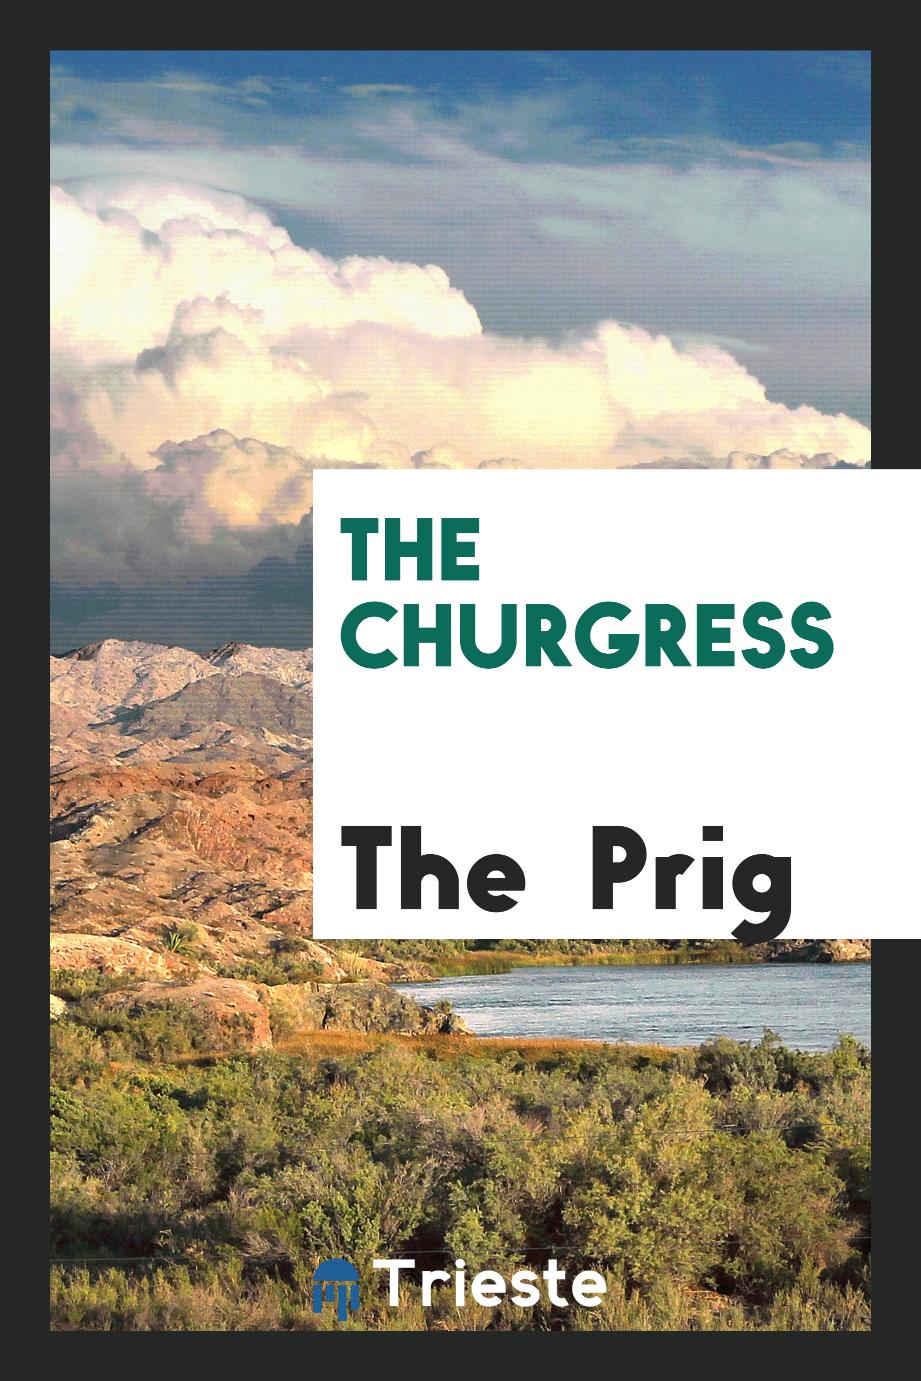 The Churgress